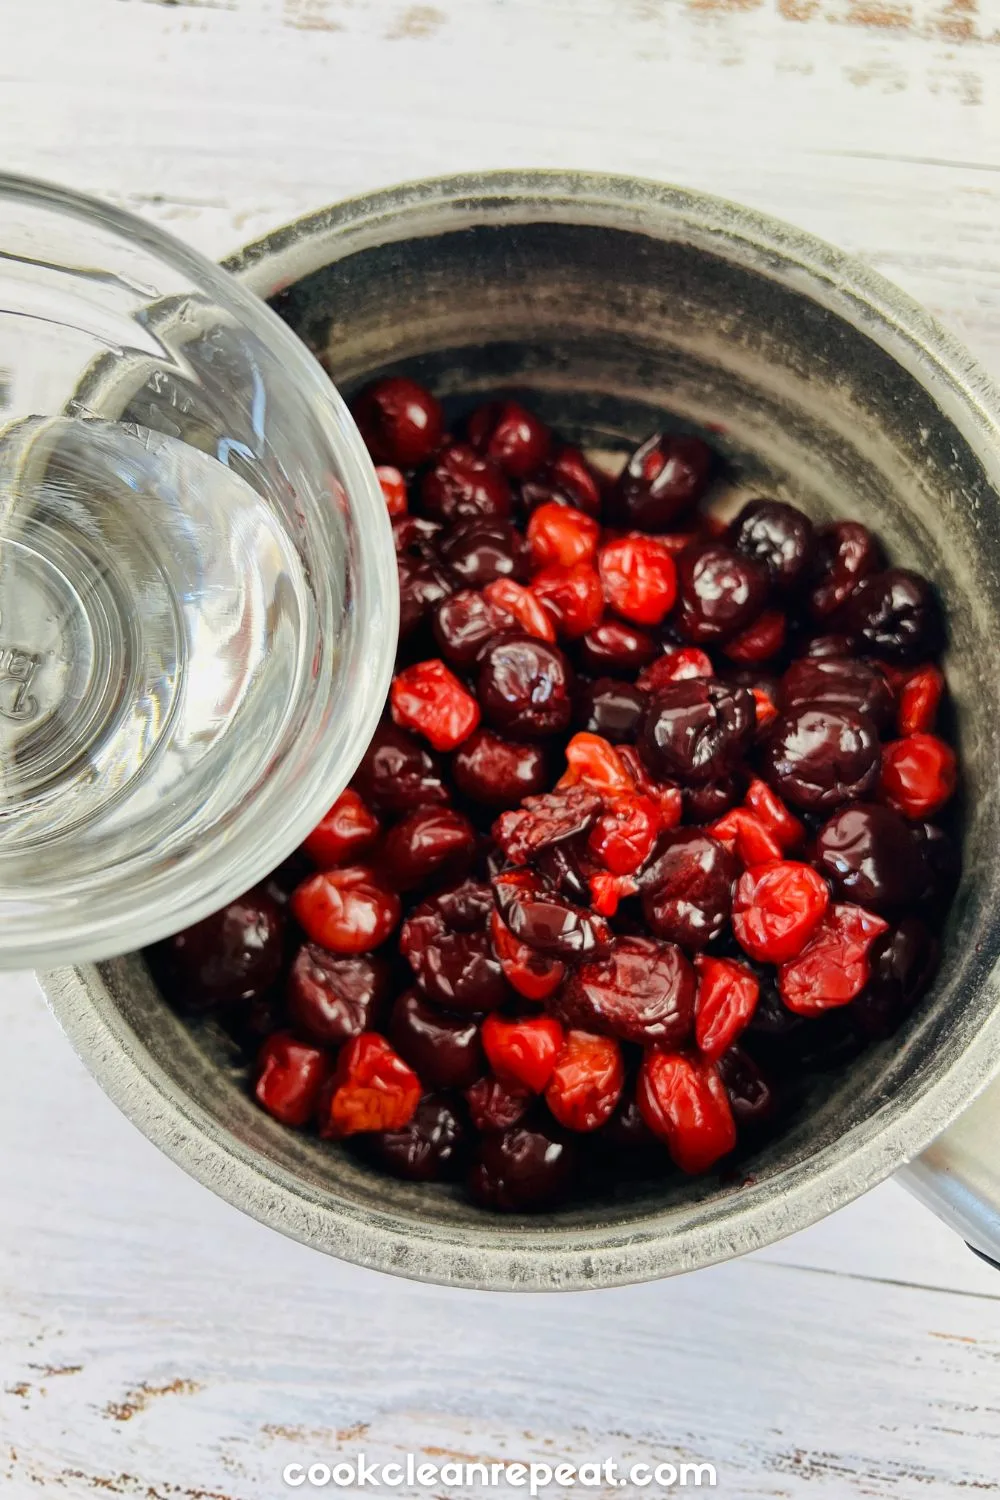 adding water to the cherries